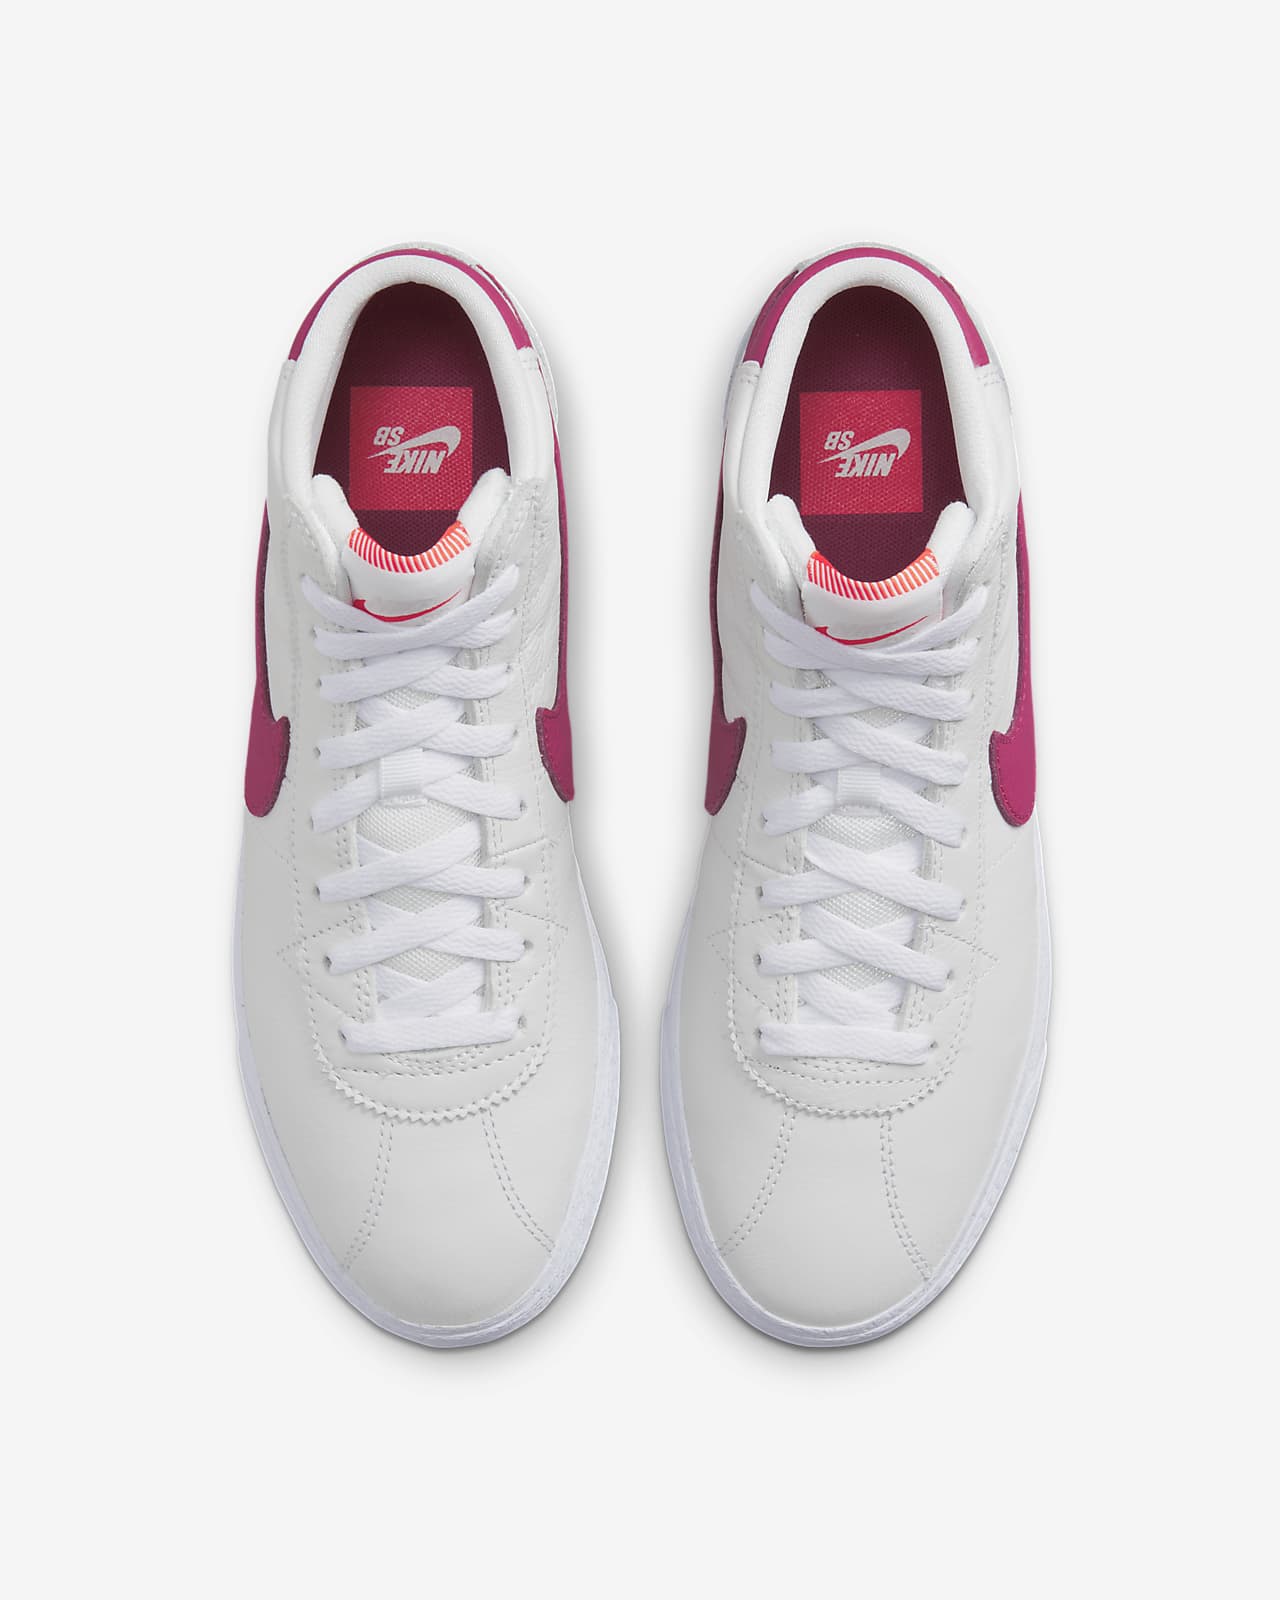 Nike SB Bruin Hi Shoes.